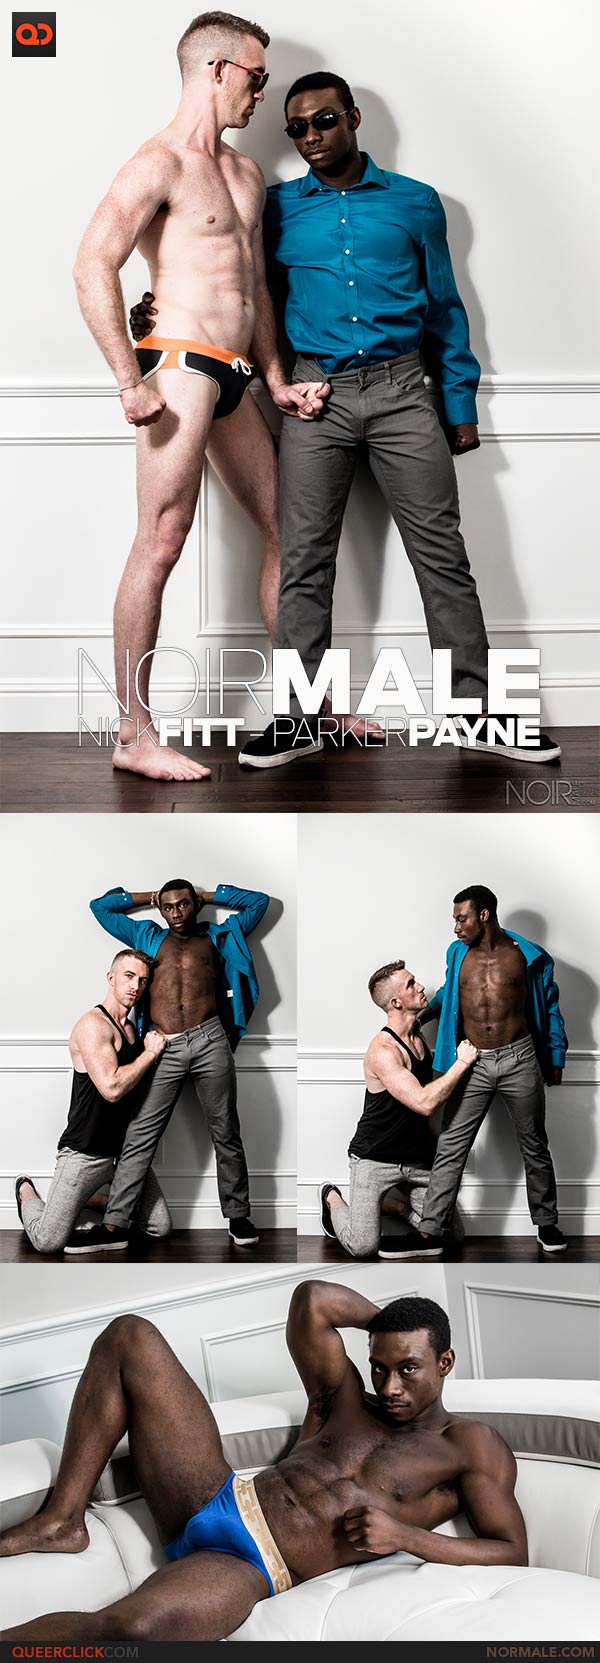 Noir Male:  Nick Fitt and Parker Payne